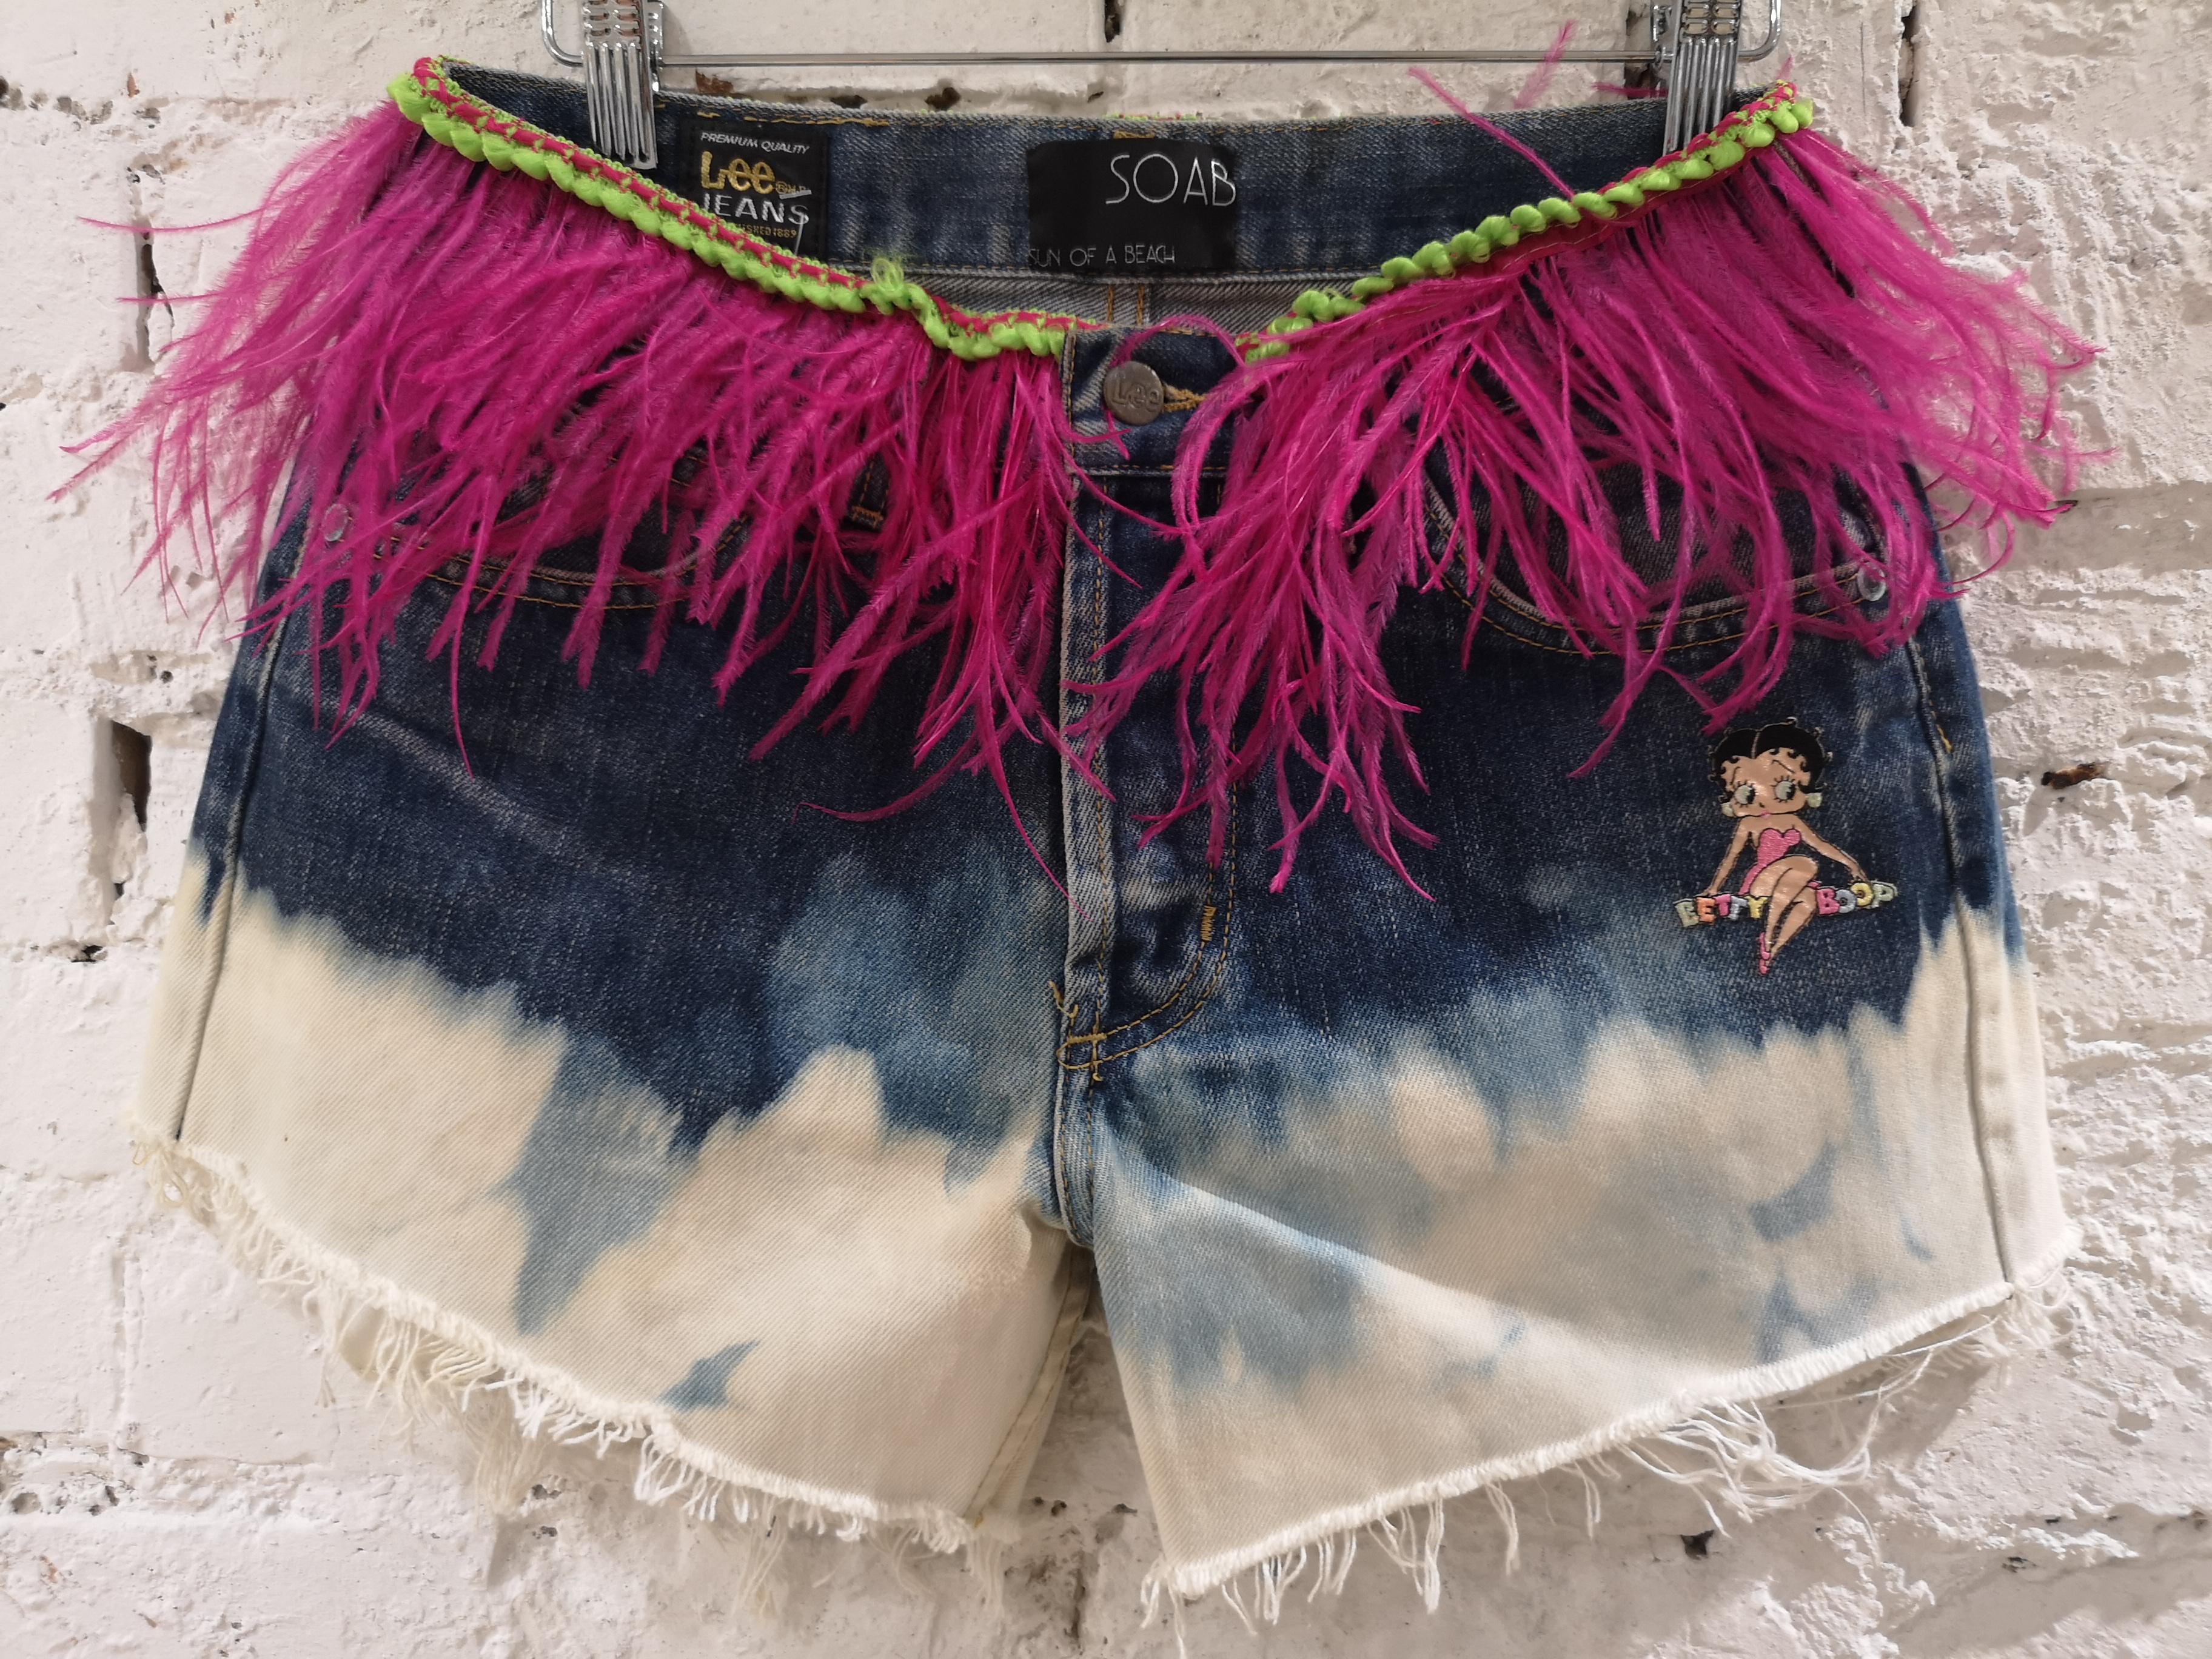 SOAB denim Betty Boop fucsia feathers shorts
totally handmade
waist: 76 cm
lenght 32 cm